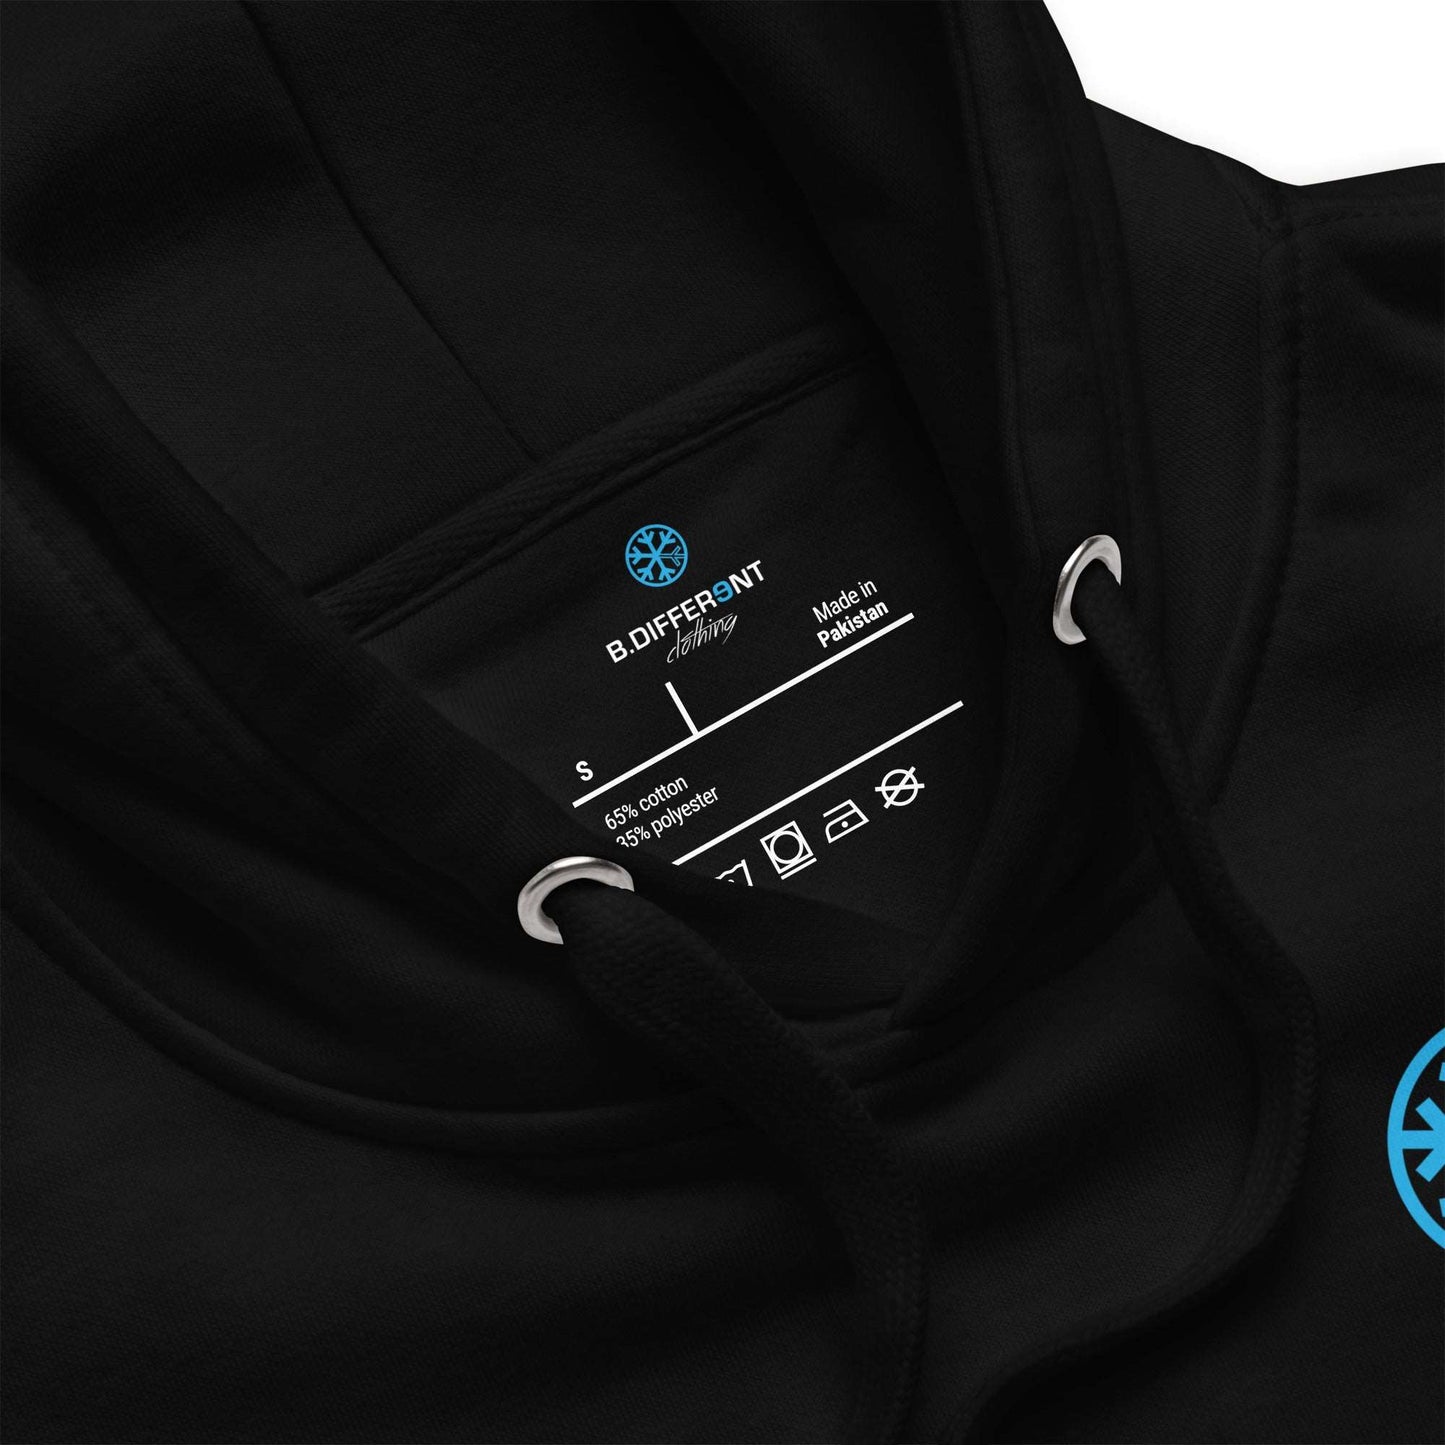 collar B.DFRNT 17 can hoodie black by B.Different Clothing street art graffiti inspired streetwear brand